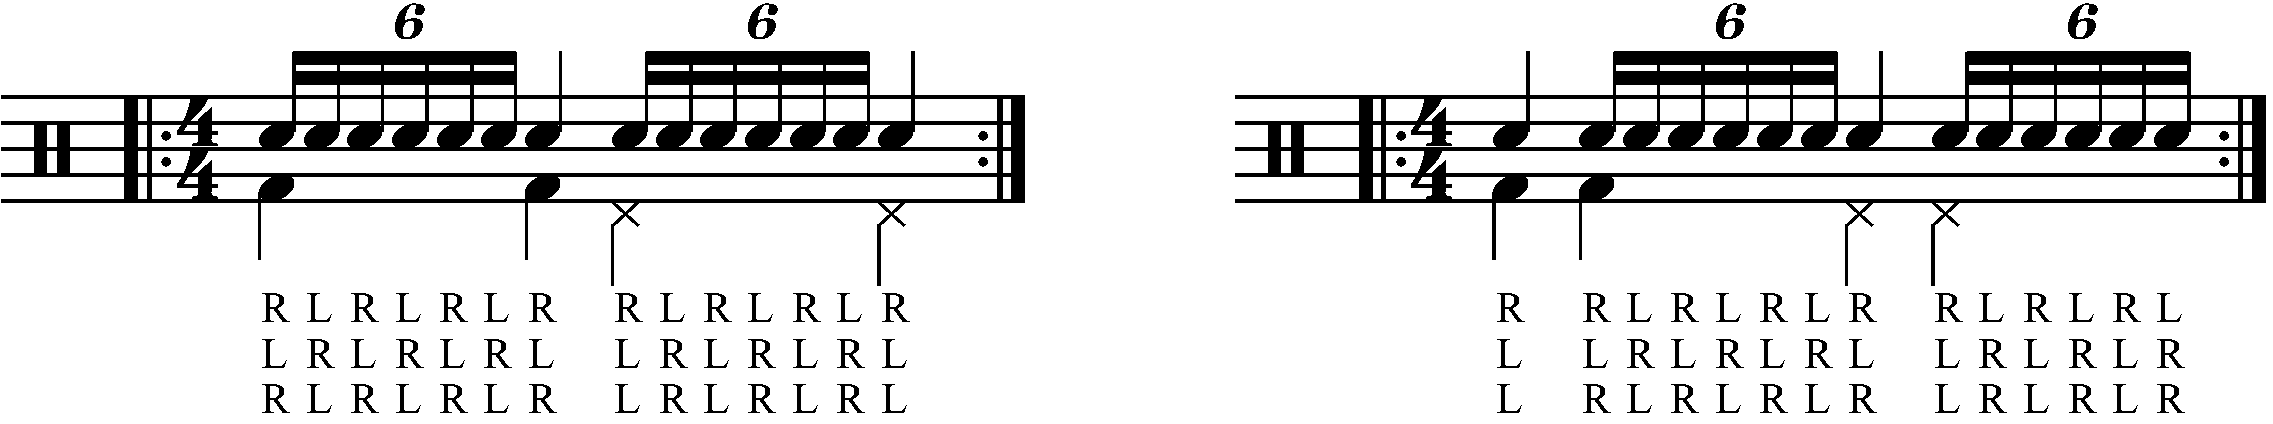 Adding quarter note feet under a single stroke 7